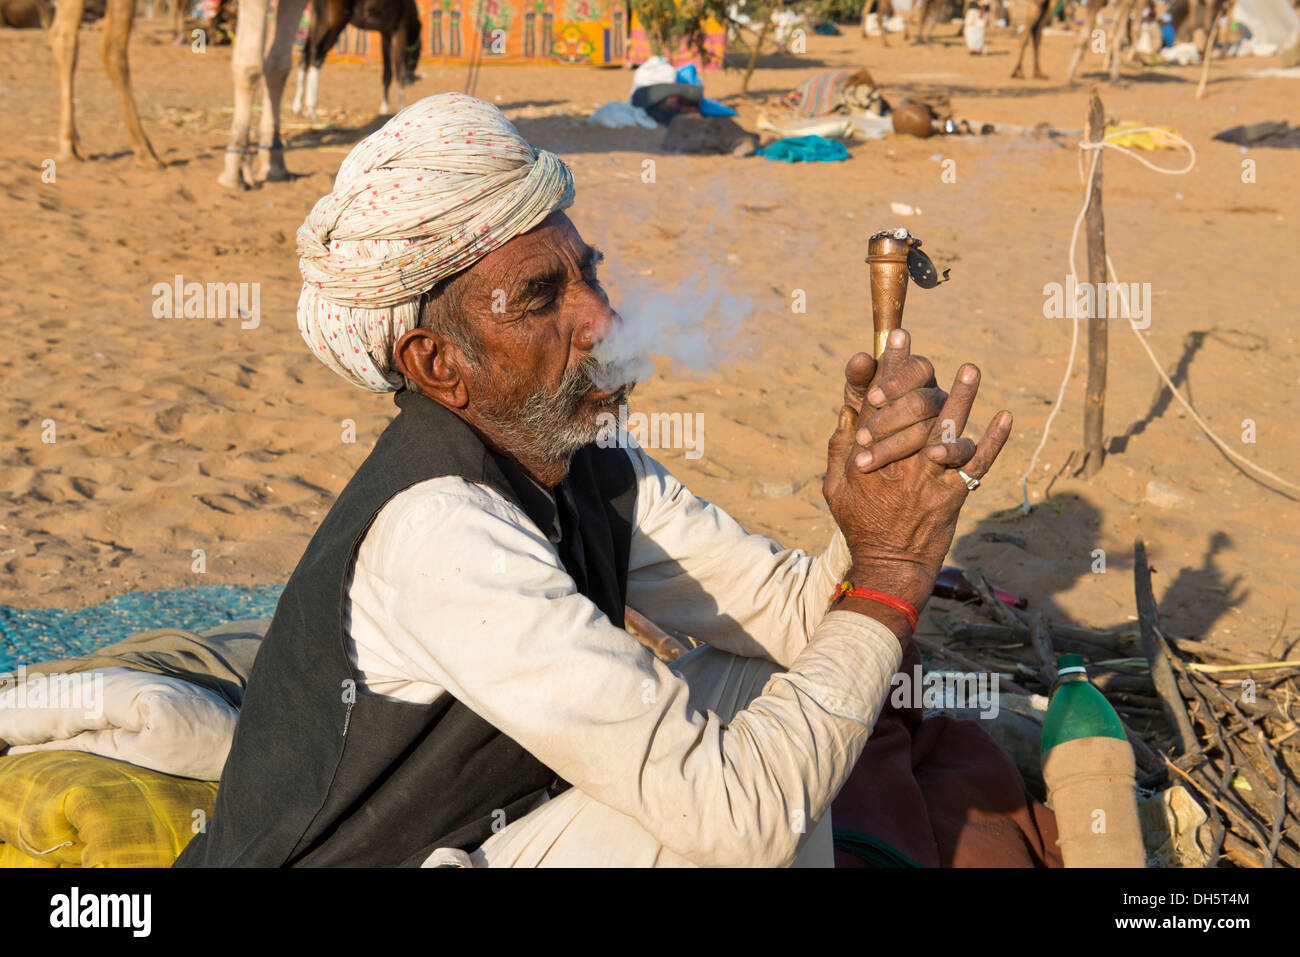 Indian with a turban sitting on the ground smoking a hash pipe, Pushkar Camel Fair, Pushkar, Rajasthan, India Stock Photo